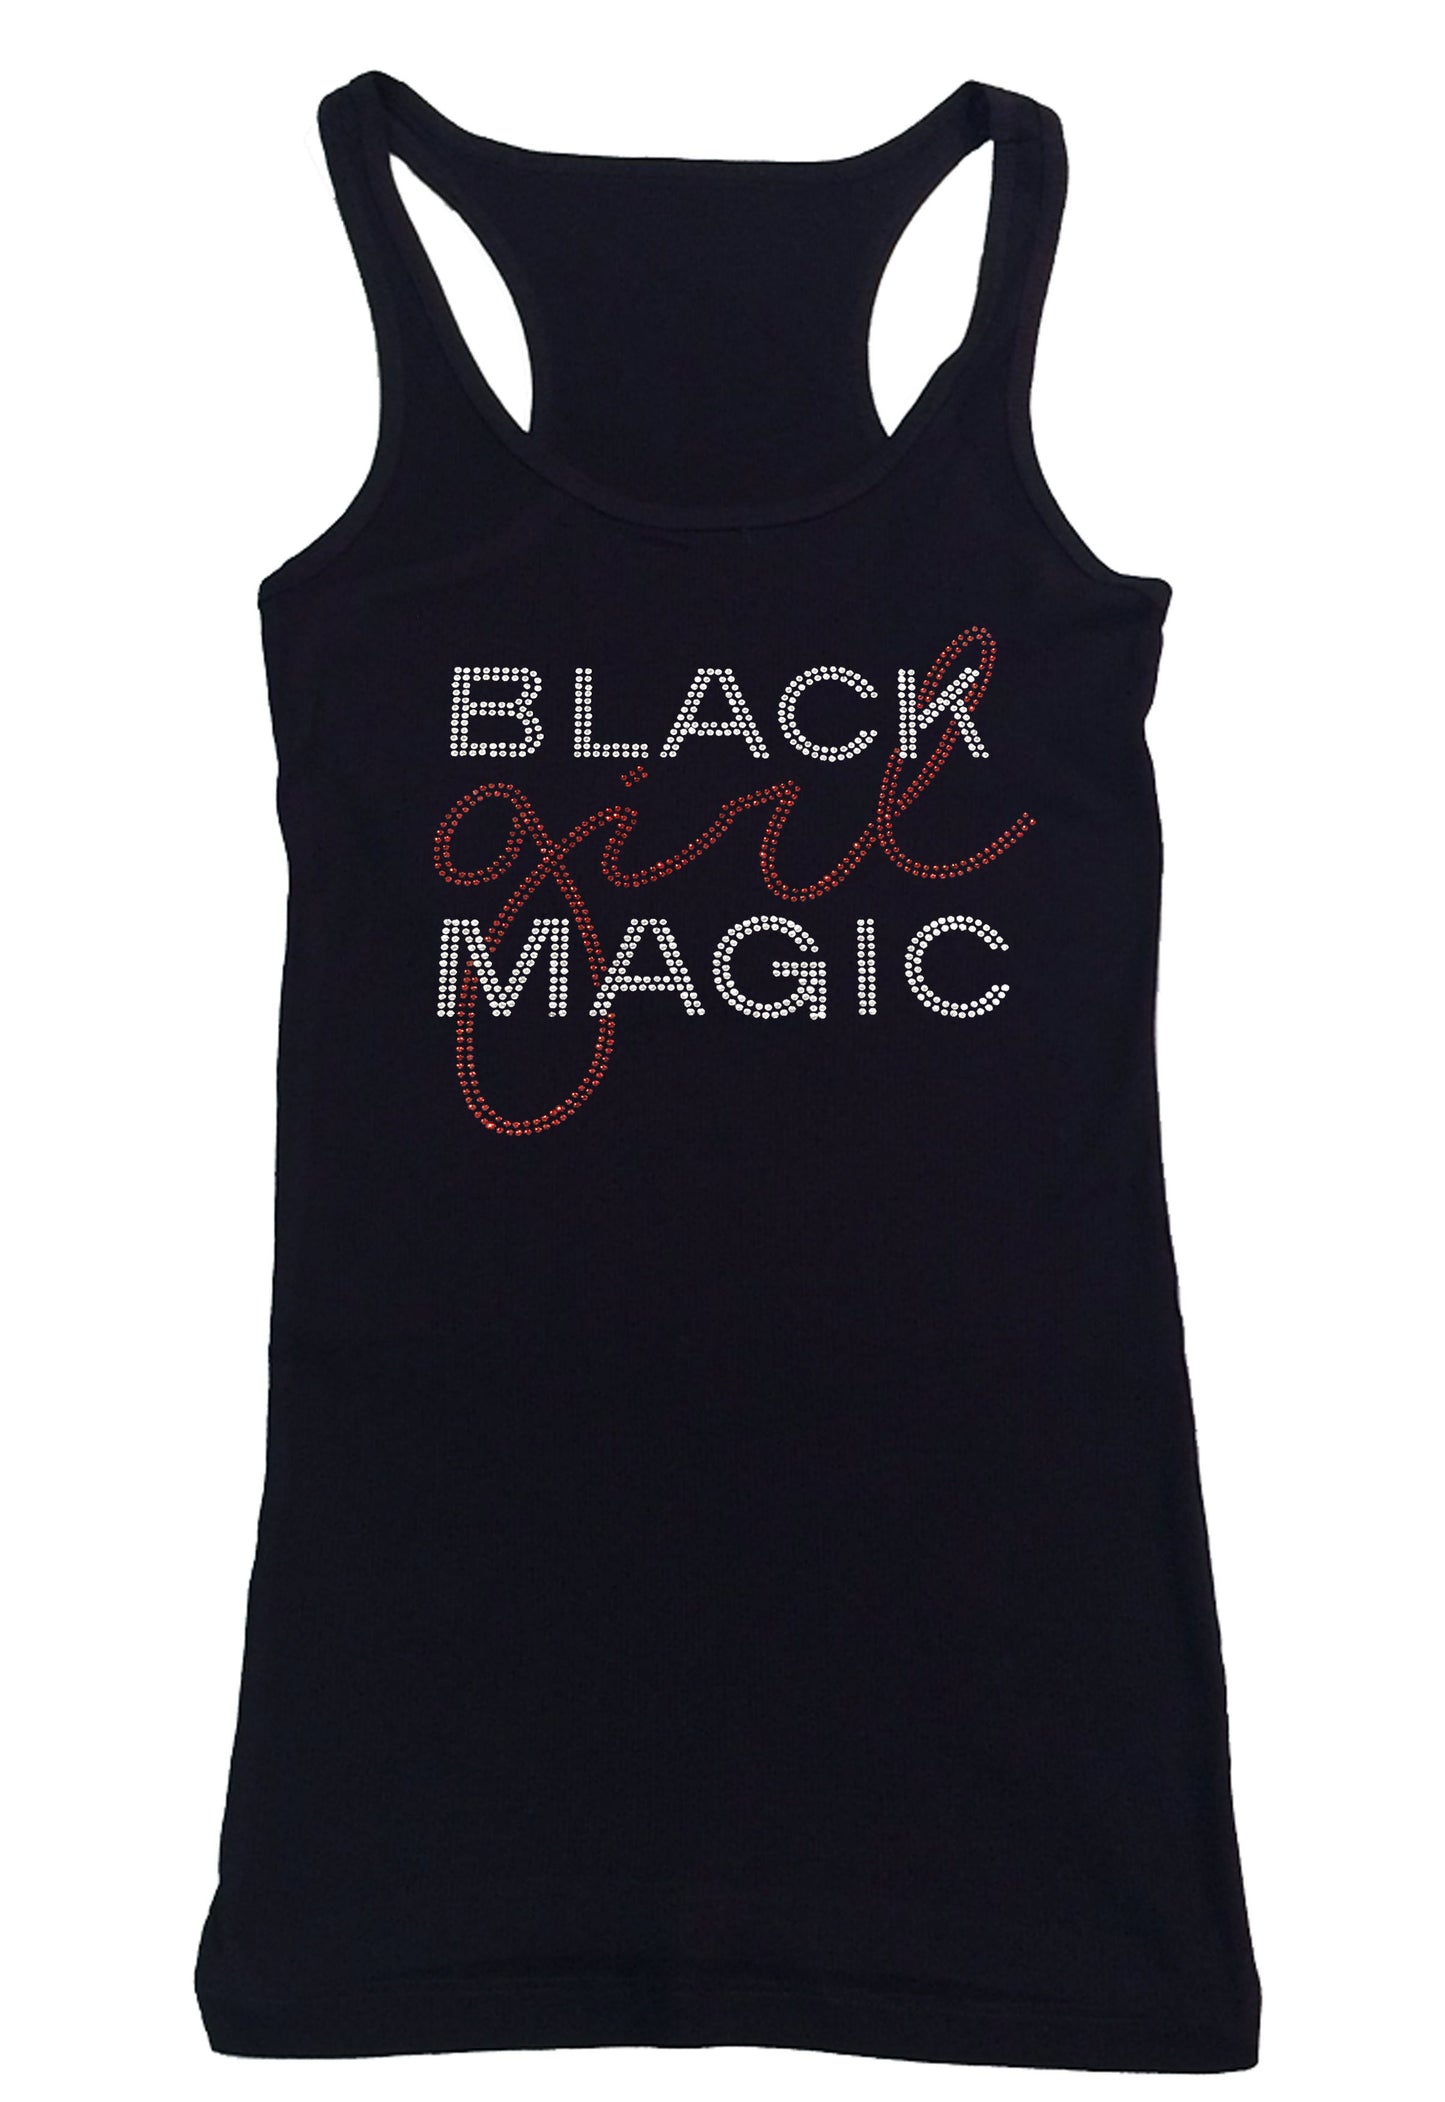 Womens T-shirt with Black Girl Magic in Rhinestones